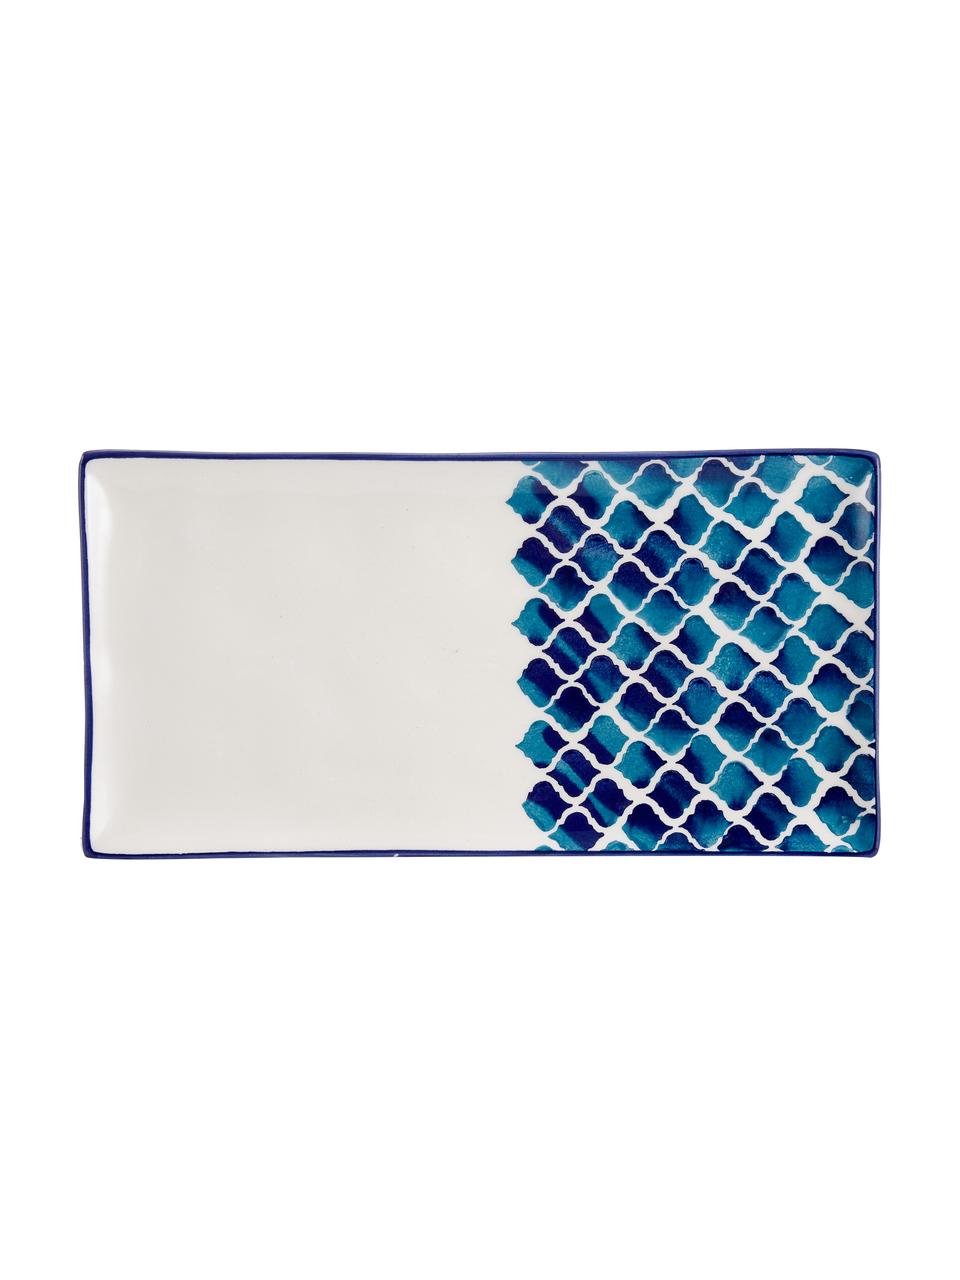 Ručně vyrobený servírovací talíř Ikat, D 29 x Š 15 cm, Keramika, Bílá, modrá, D 29 cm, Š 15 cm